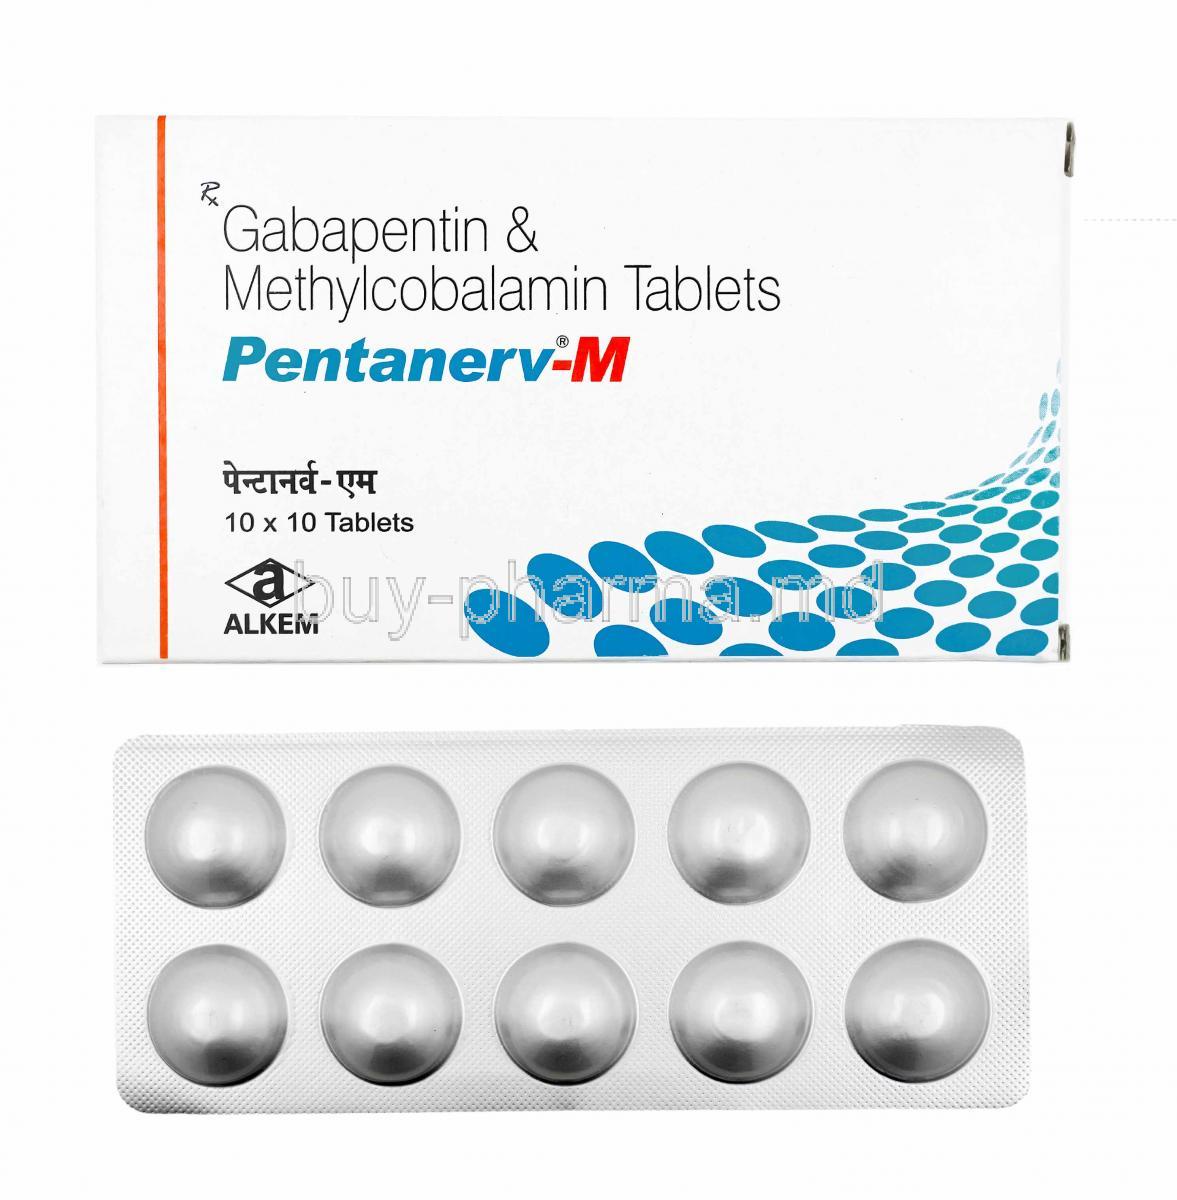 Amoxicillin 250 mg capsule price